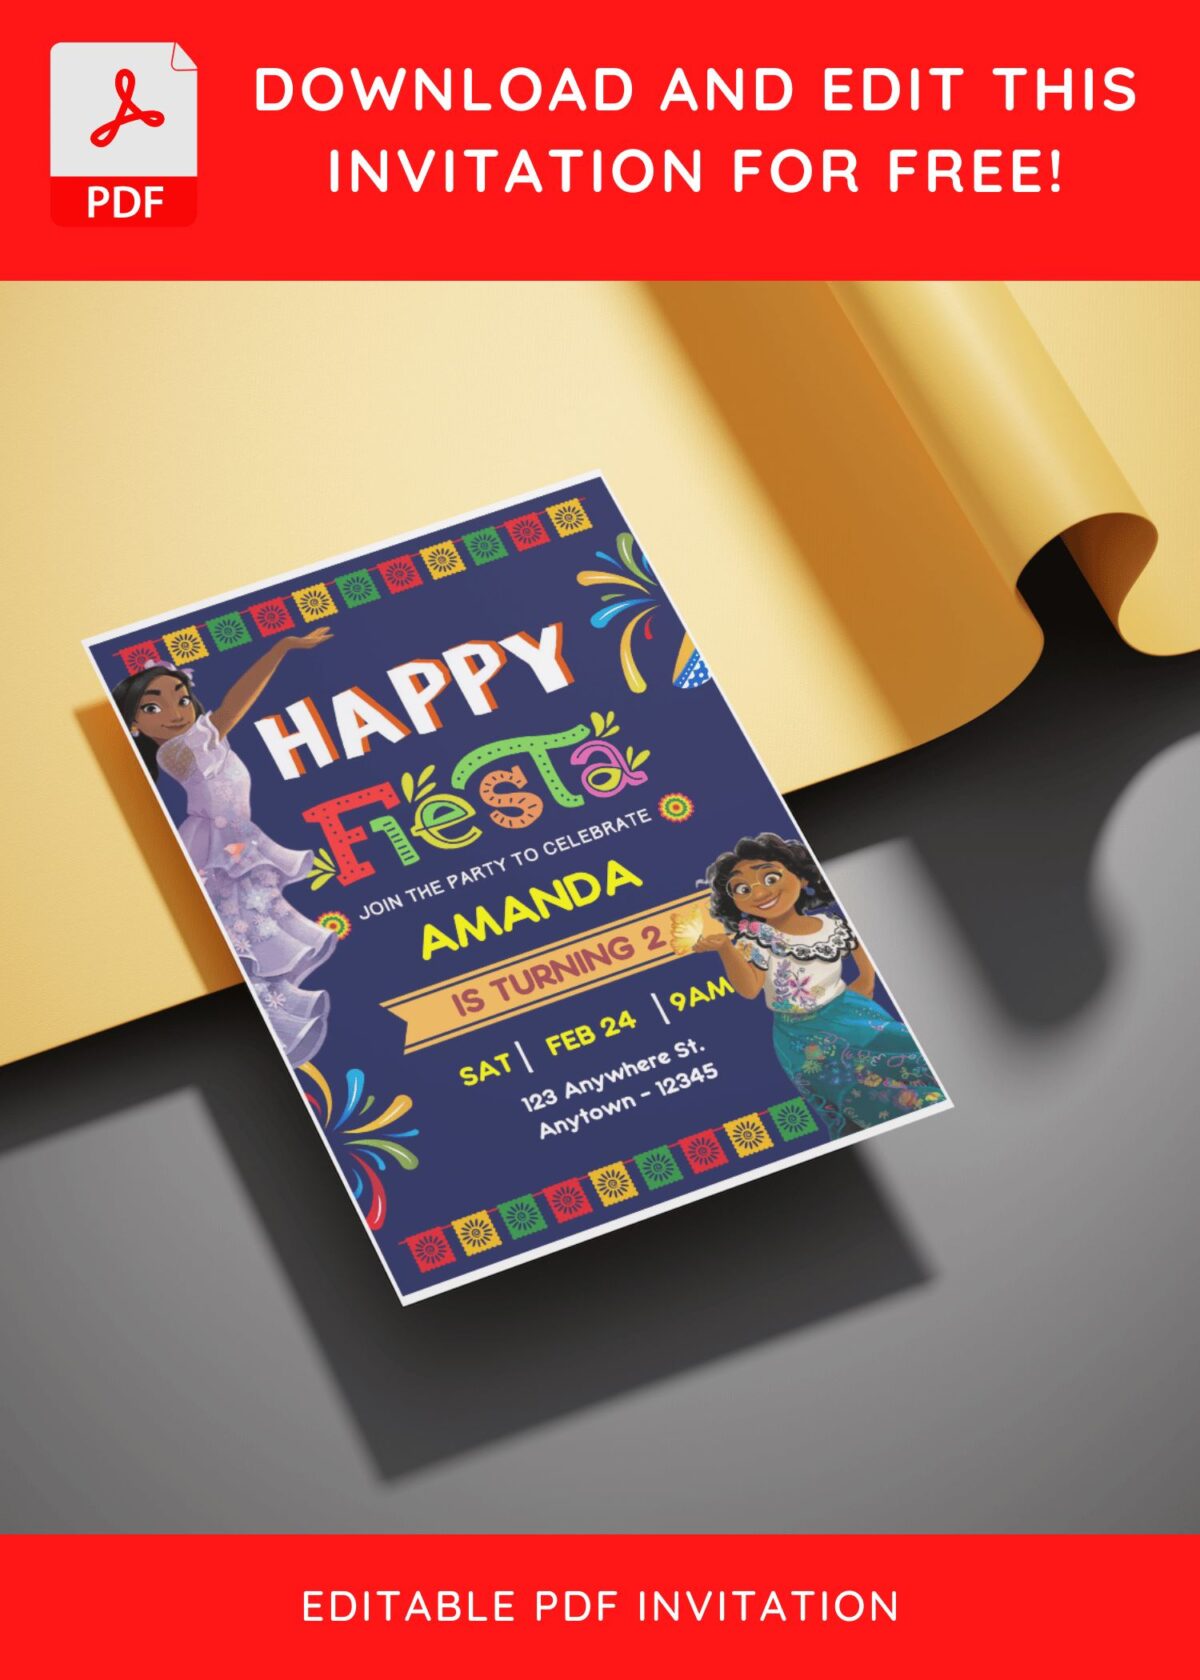 (Free Editable PDF) Happy Fiesta Disney Encanto Birthday Invitation Templates E